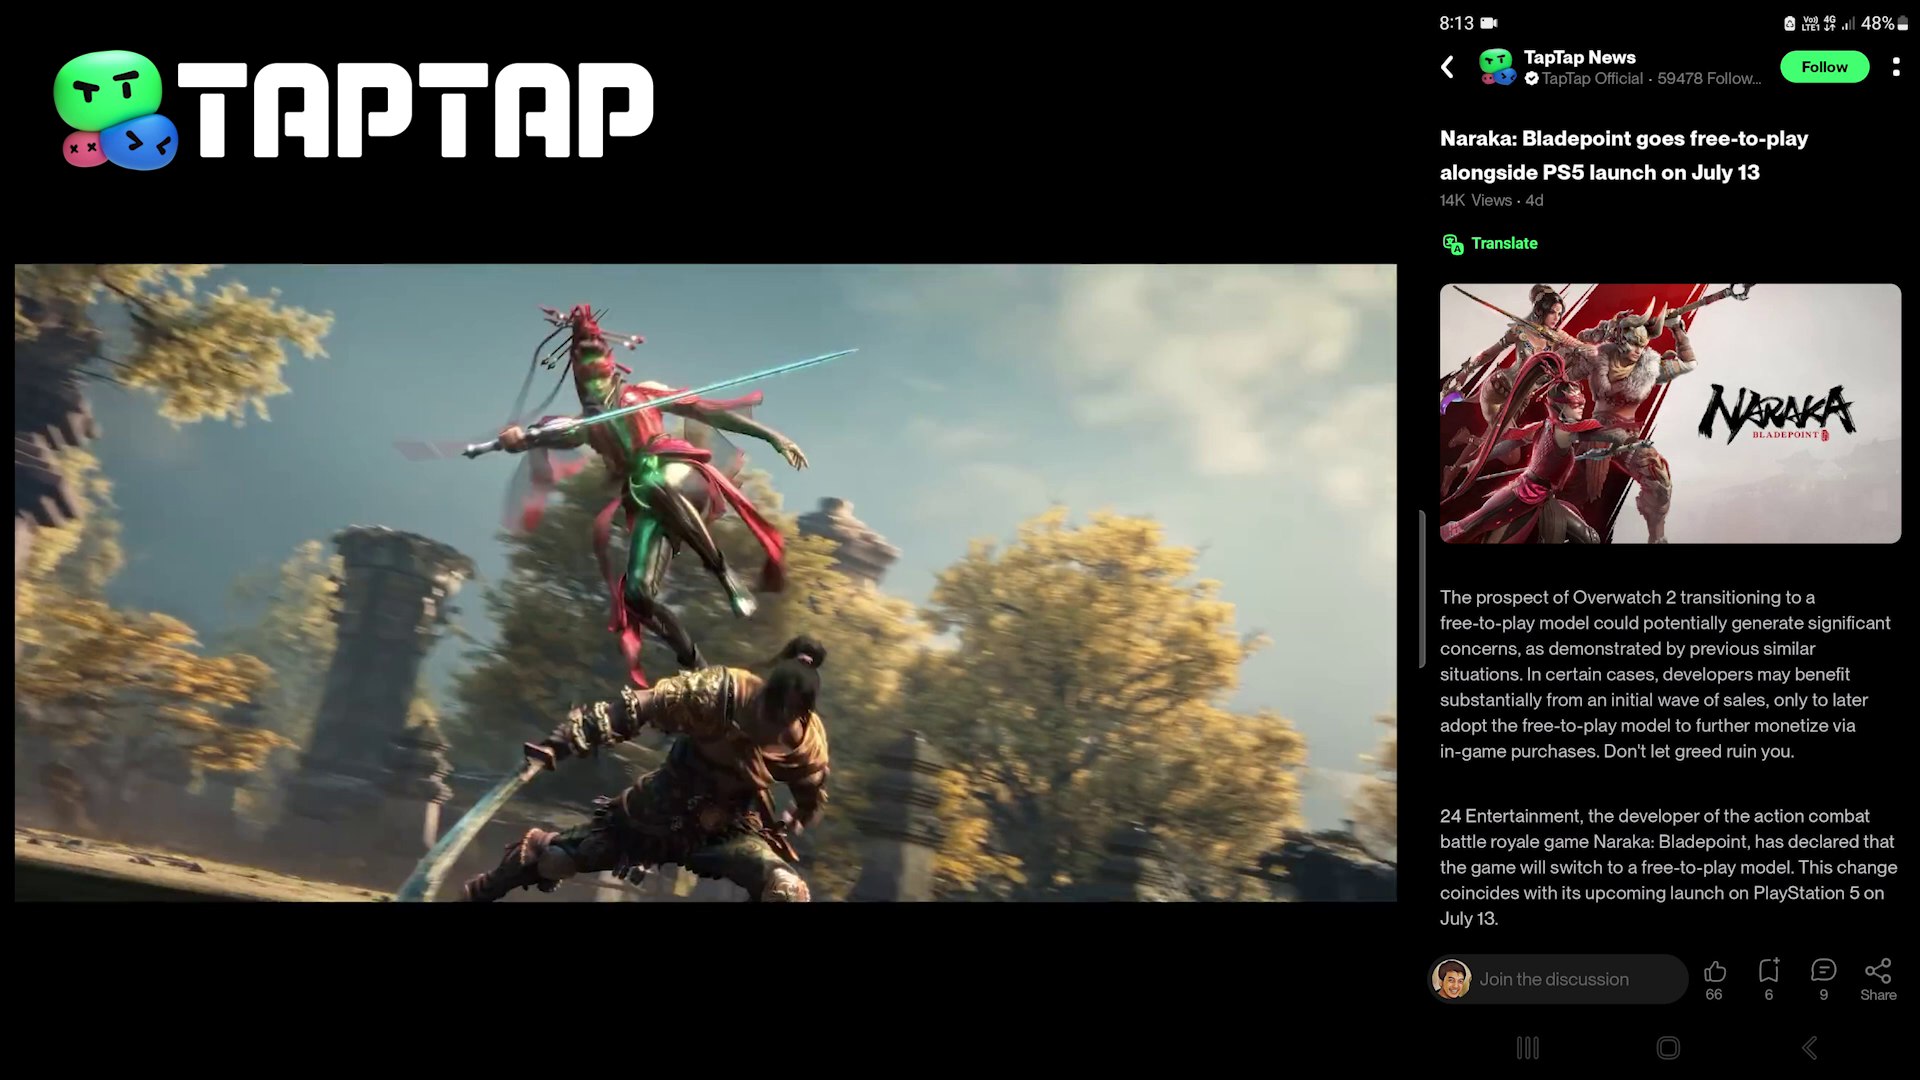 Naraka: Bladepoint goes free-to-play alongside PS5 launch on July 13 -  NARAKA: BLADEPOINT Mobile - NARAKA: BLADEPOINT - TapTap